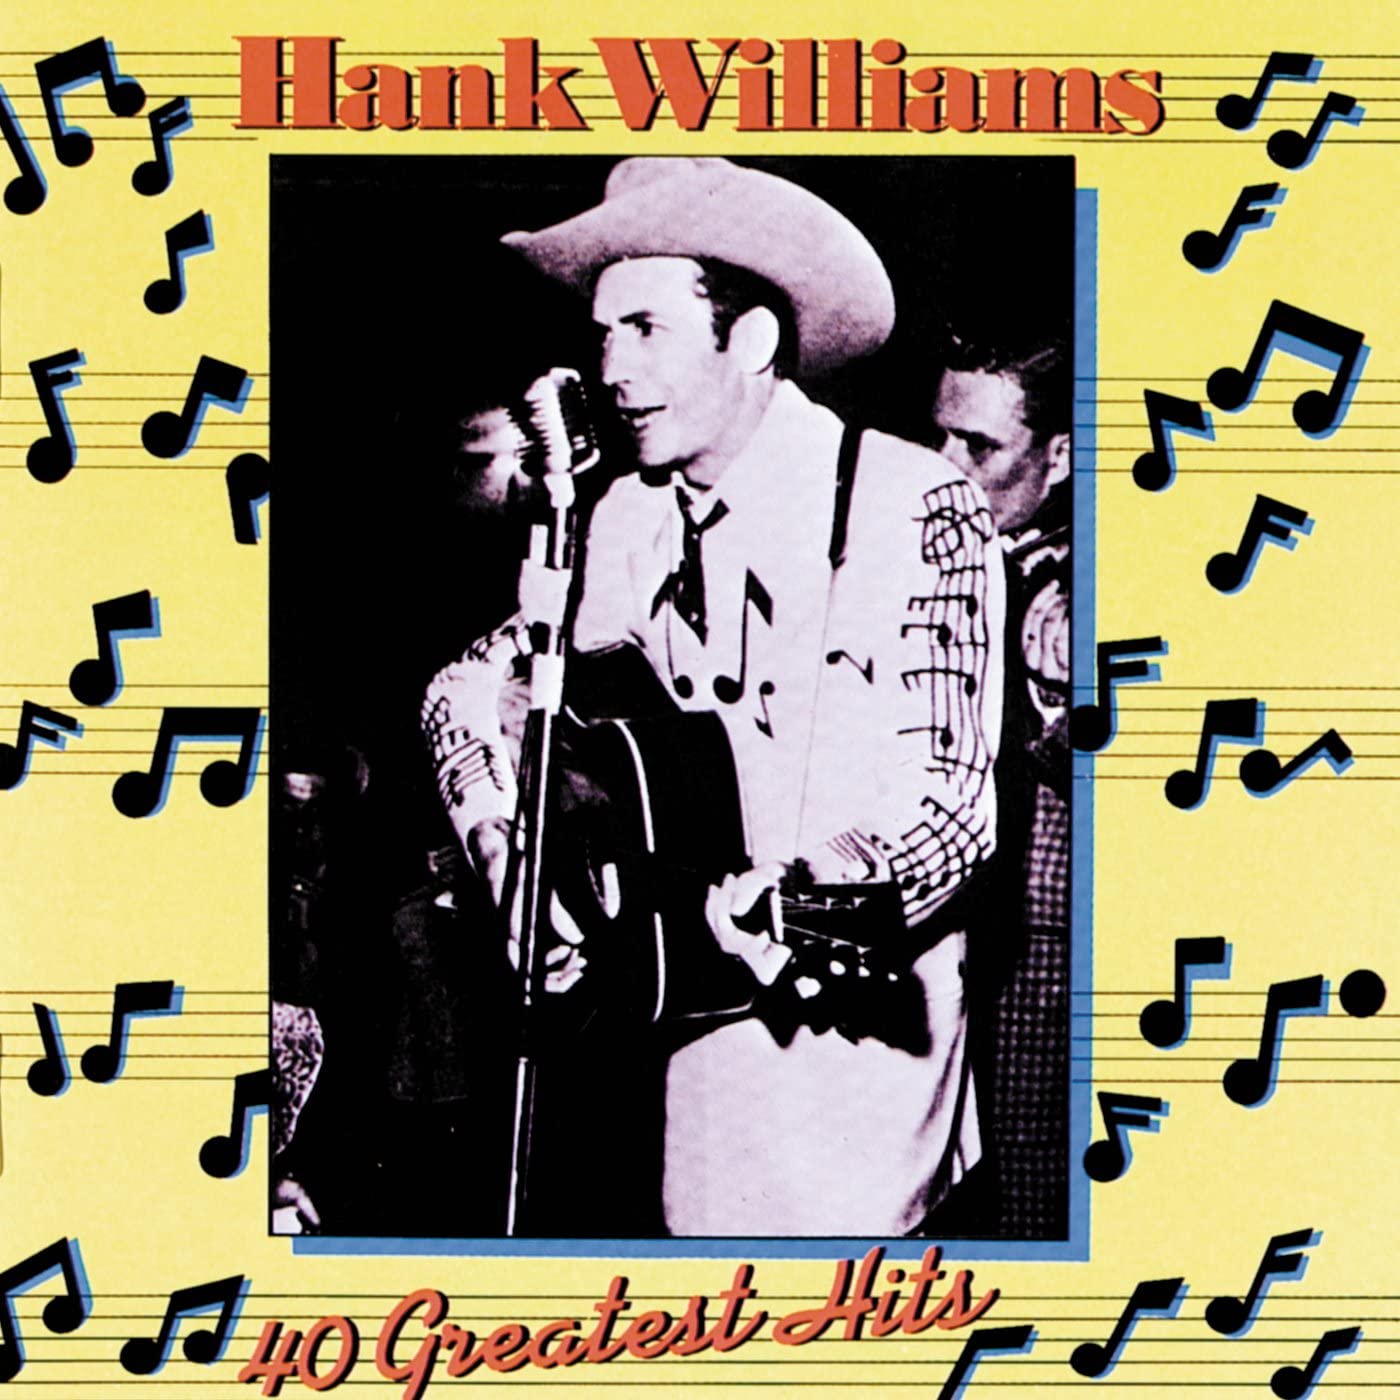 Hank Williams - 40 Greatest Hits - 2CD